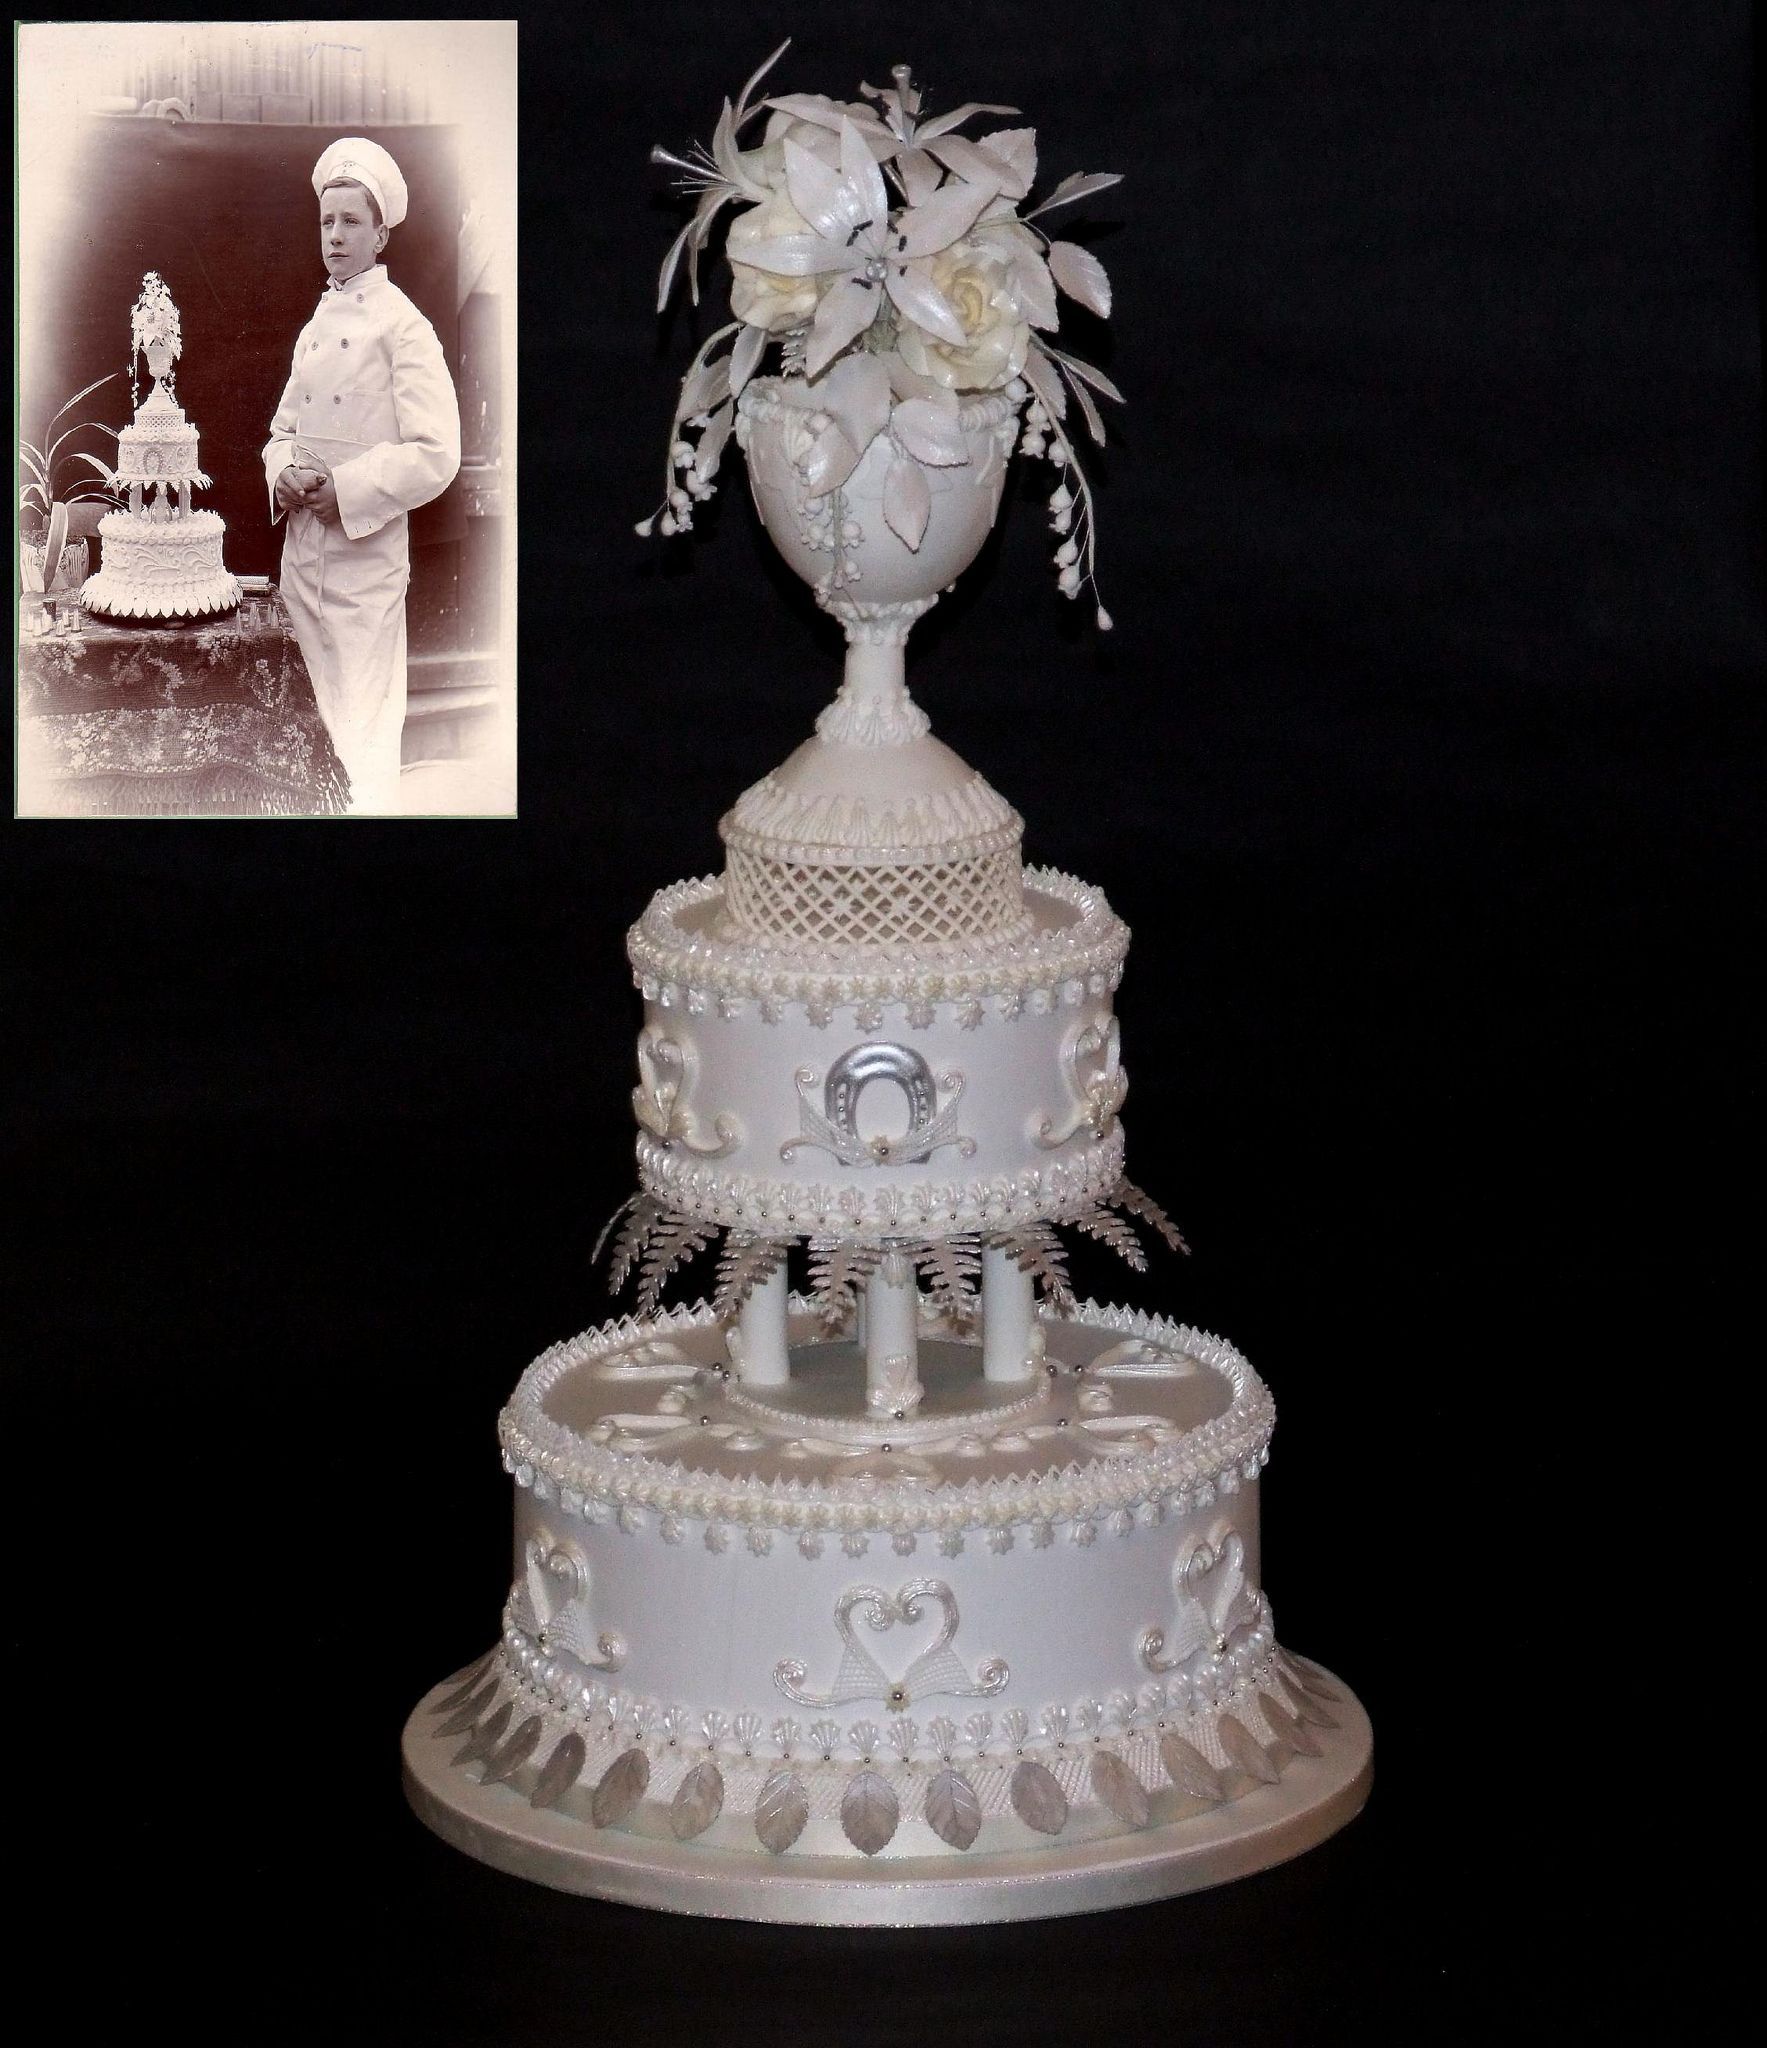 The Sweet Elegance of 19th Century Wedding Cakes